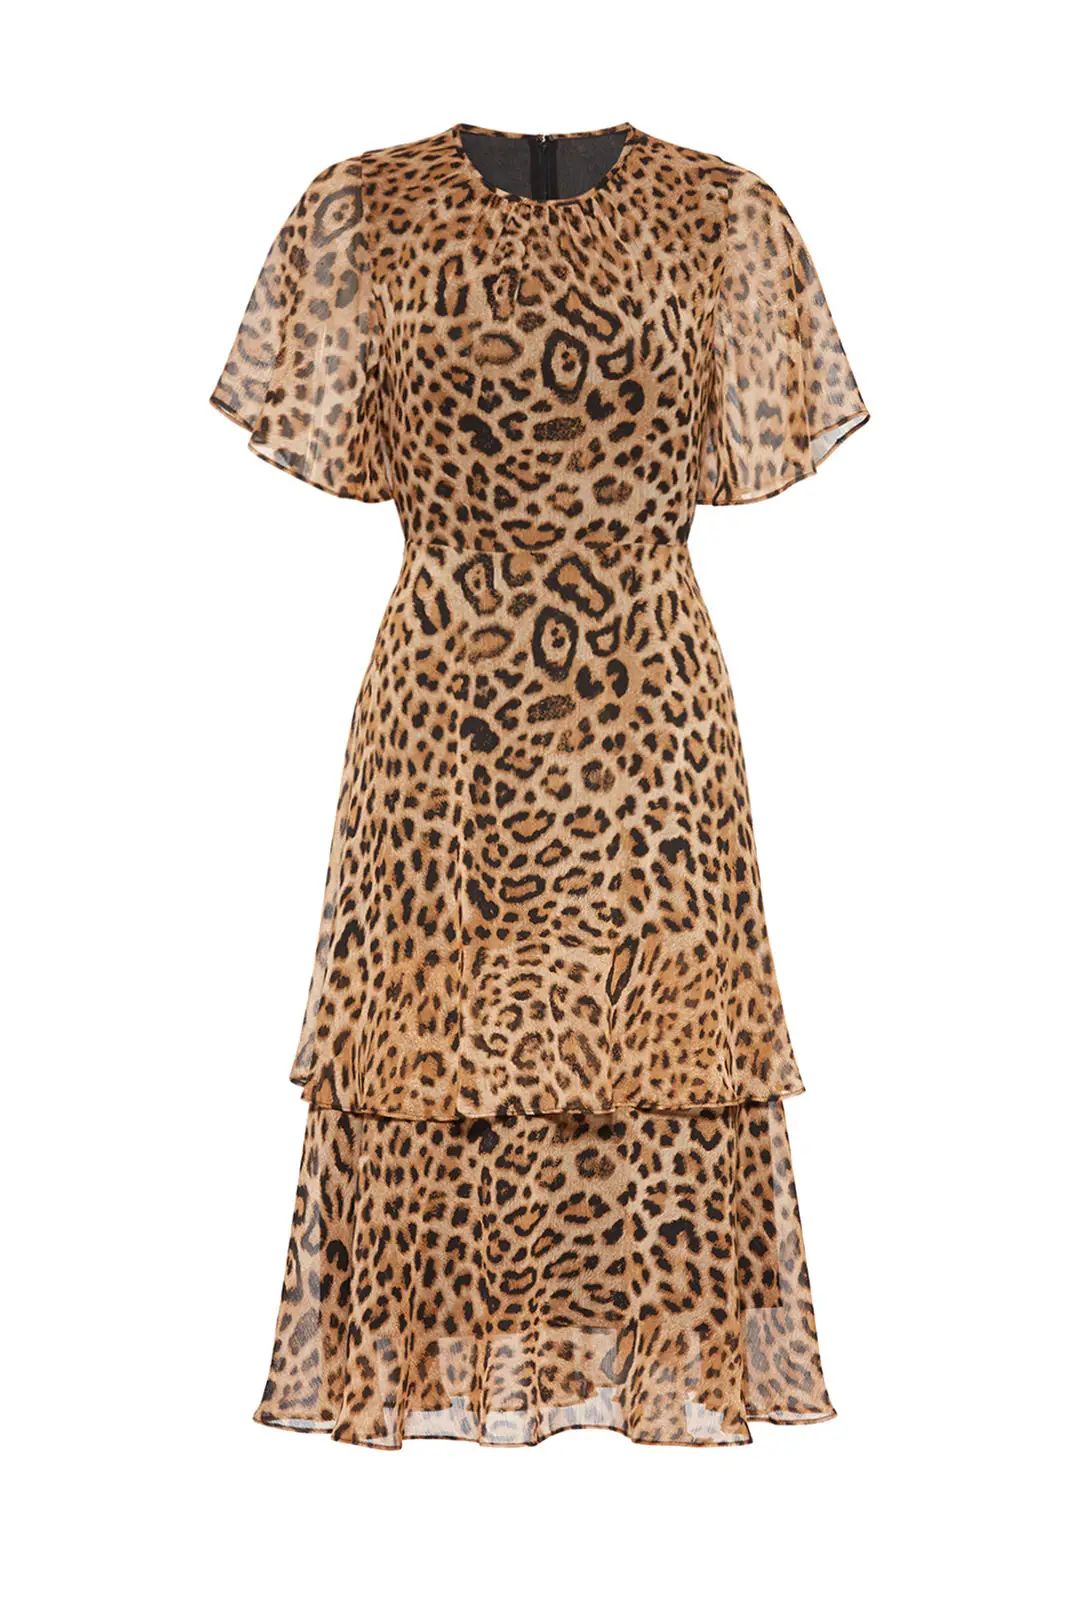 RACHEL ROY COLLECTION Blanchette Leopard Dress | Rent The Runway